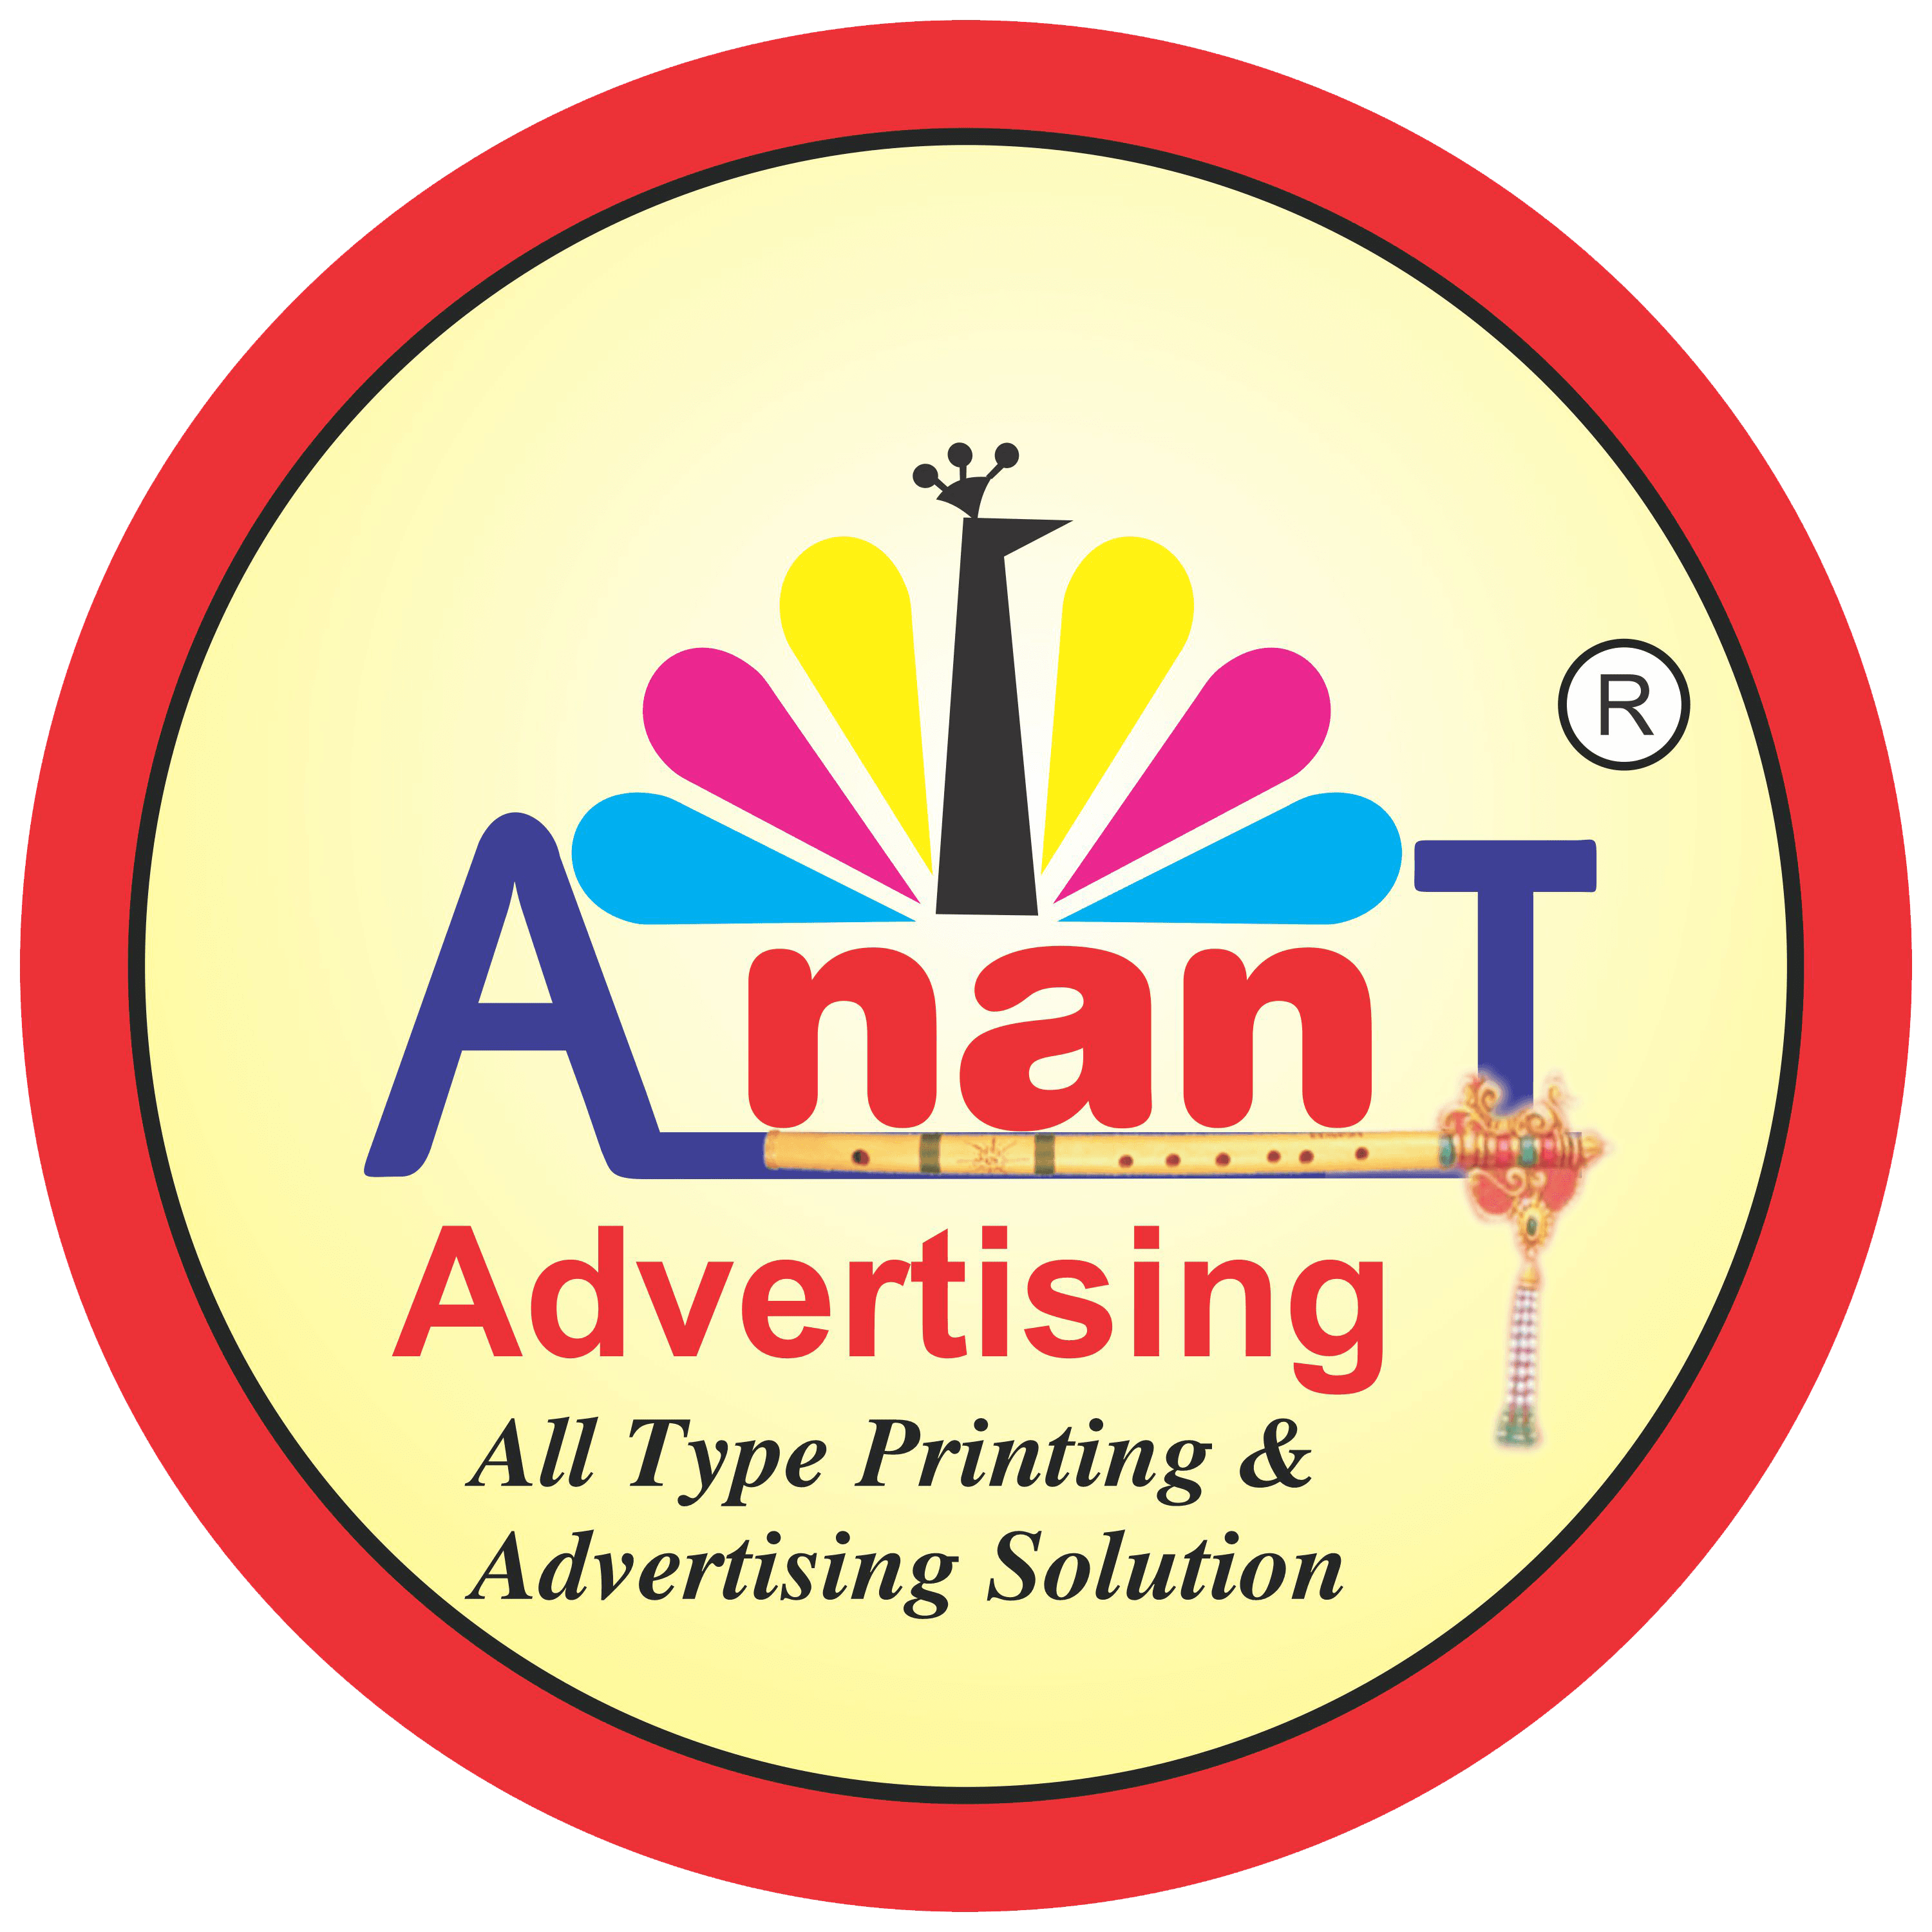 Anant Advertising